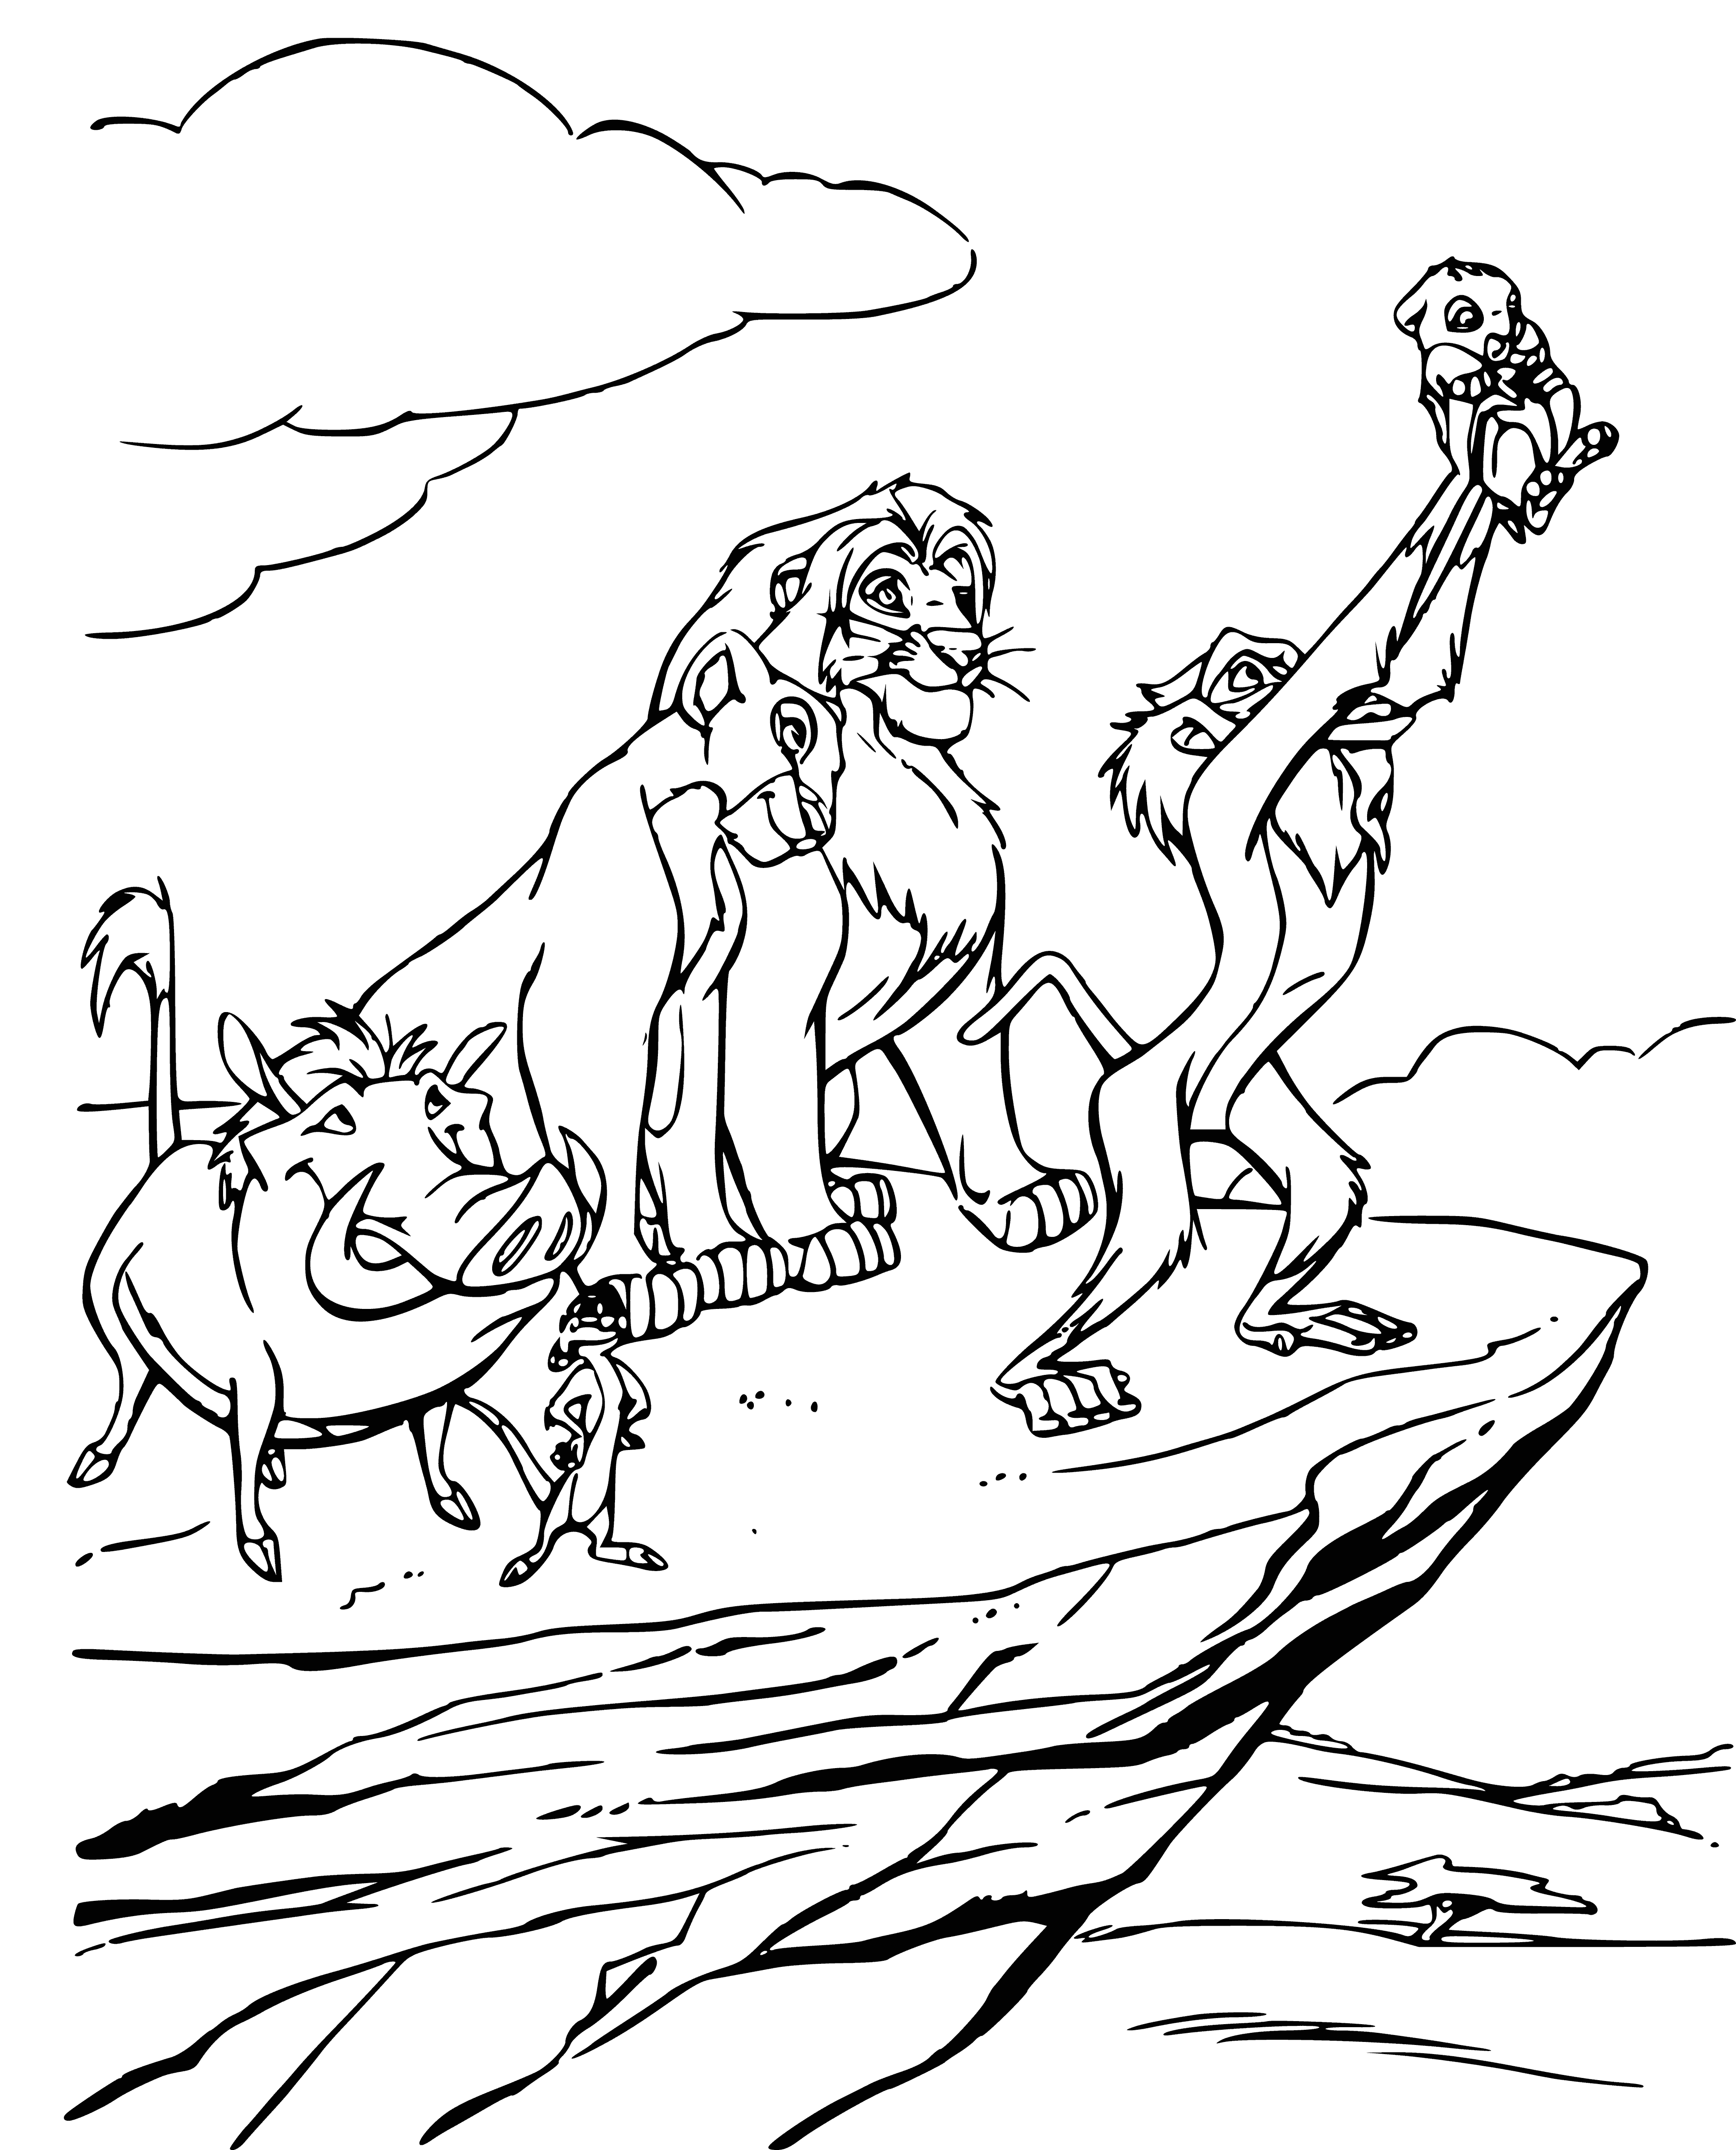 coloring page: The animal kingdom comes to welcome the birth of Simba, new heir to Mufasa and Sarabi.